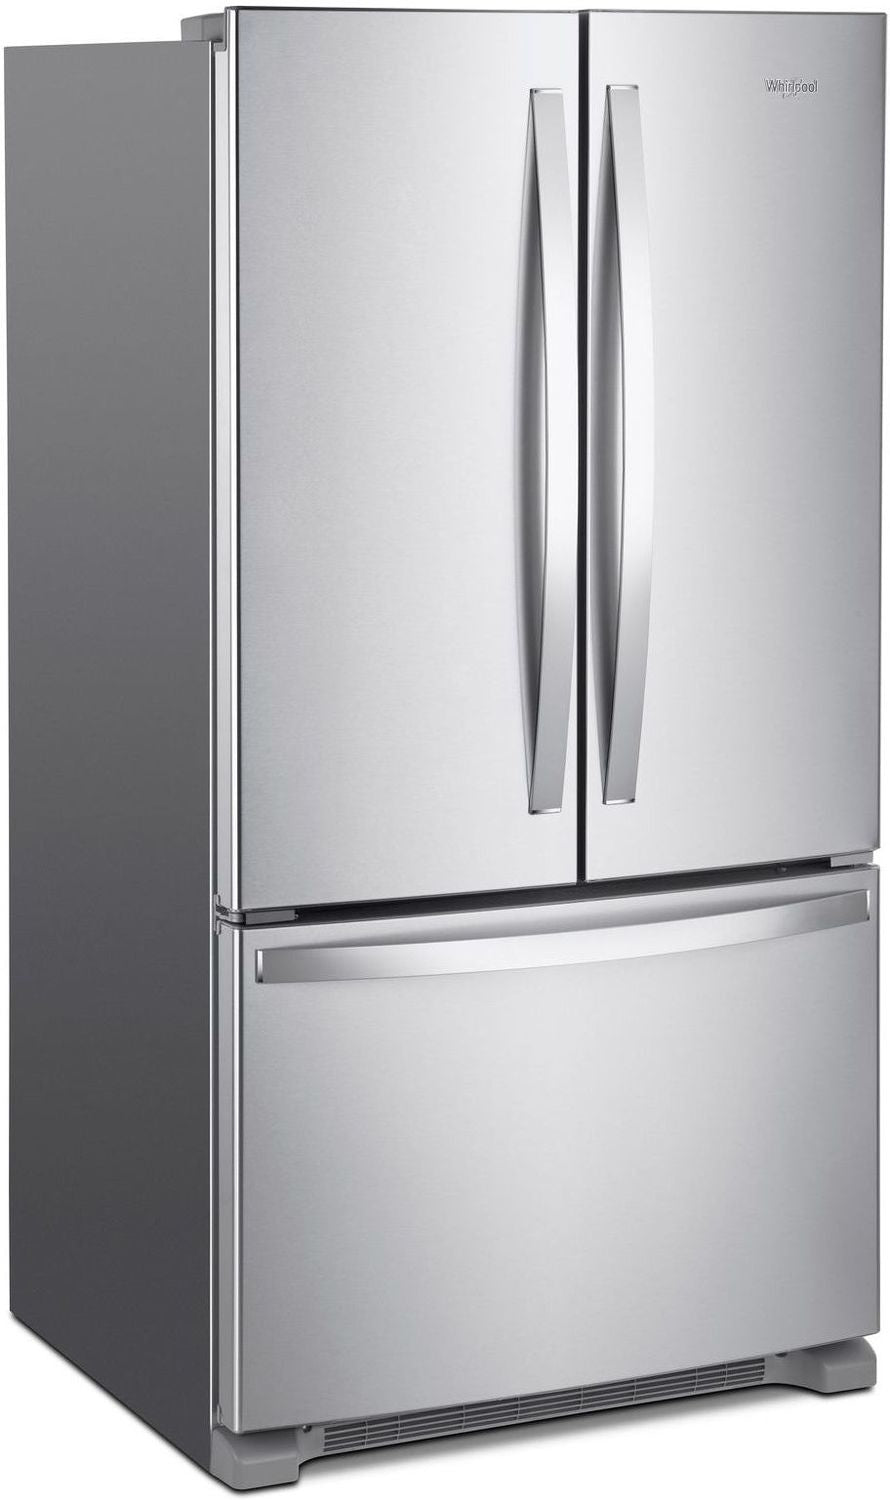 Whirlpool Stainless Steel French Door Refrigerator (25 Cu. Ft.) - WRF535SWHZ